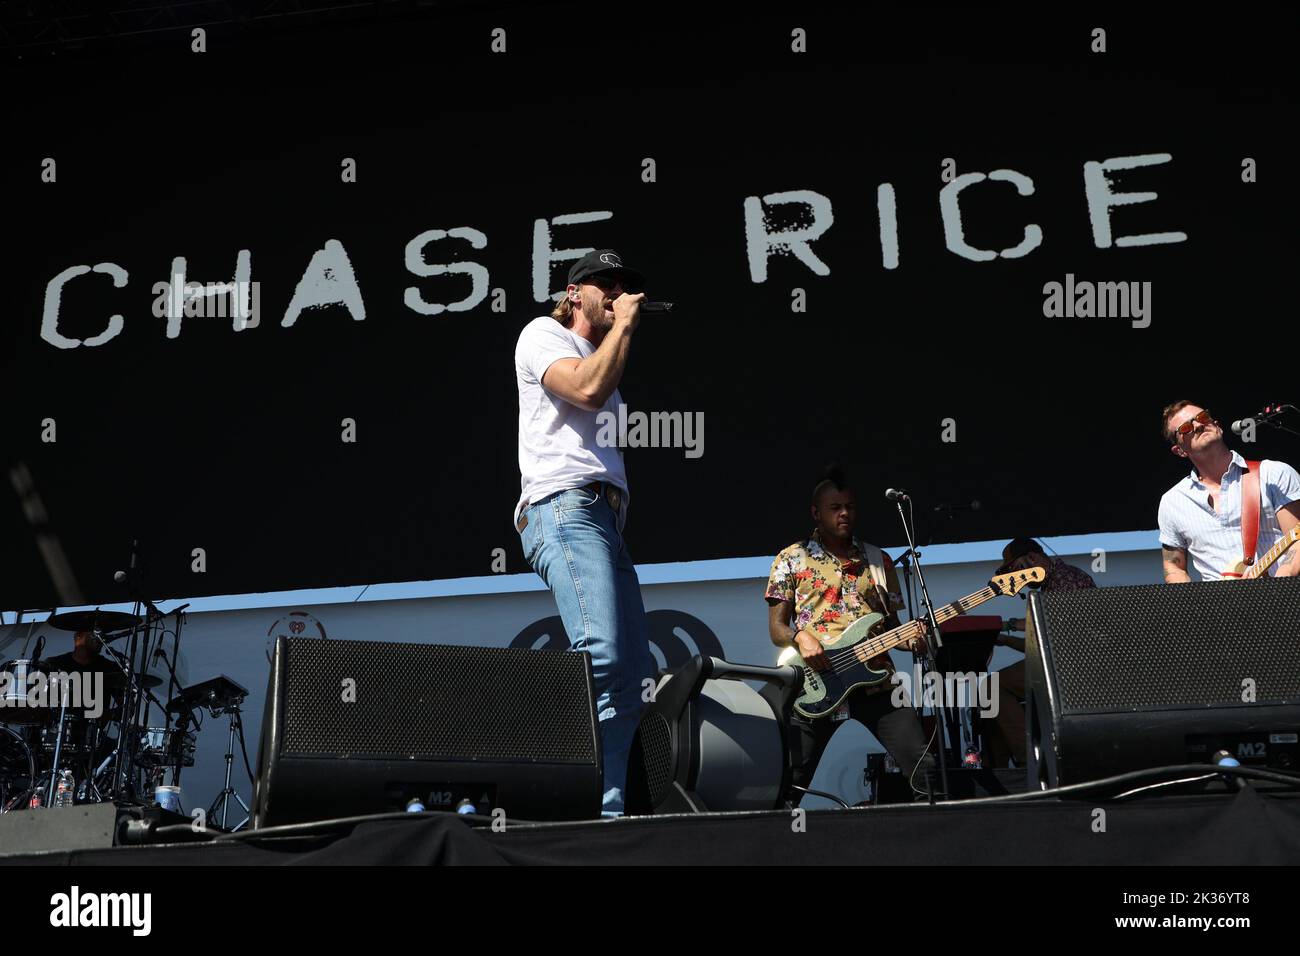 Las Vegas, Usa. 24. September 2022. Chase Rices tritt auf der Bühne während des iHeartRadio Music Festival Daytime Concerts um Area15 Uhr in Las Vegas, Nevada am Samstag, 24. September 2022 auf. Foto von James Atoa/UPI Credit: UPI/Alamy Live News Stockfoto